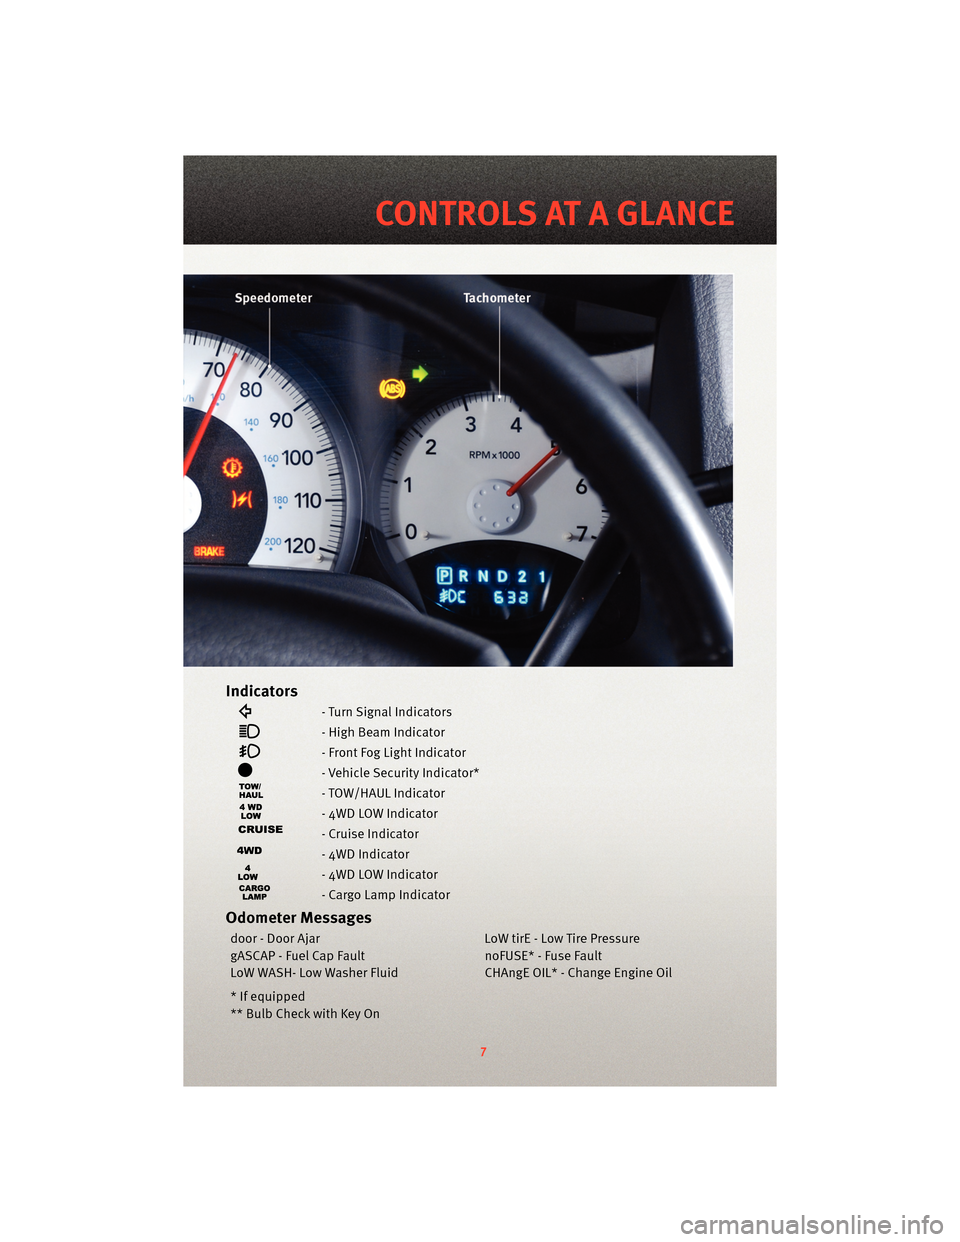 DODGE DAKOTA 2010 3.G User Guide Indicators
- Turn Signal Indicators
- High Beam Indicator
- Front Fog Light Indicator
- Vehicle Security Indicator*
- TOW/HAUL Indicator
- 4WD LOW Indicator
- Cruise Indicator
- 4WD Indicator
- 4WD LO